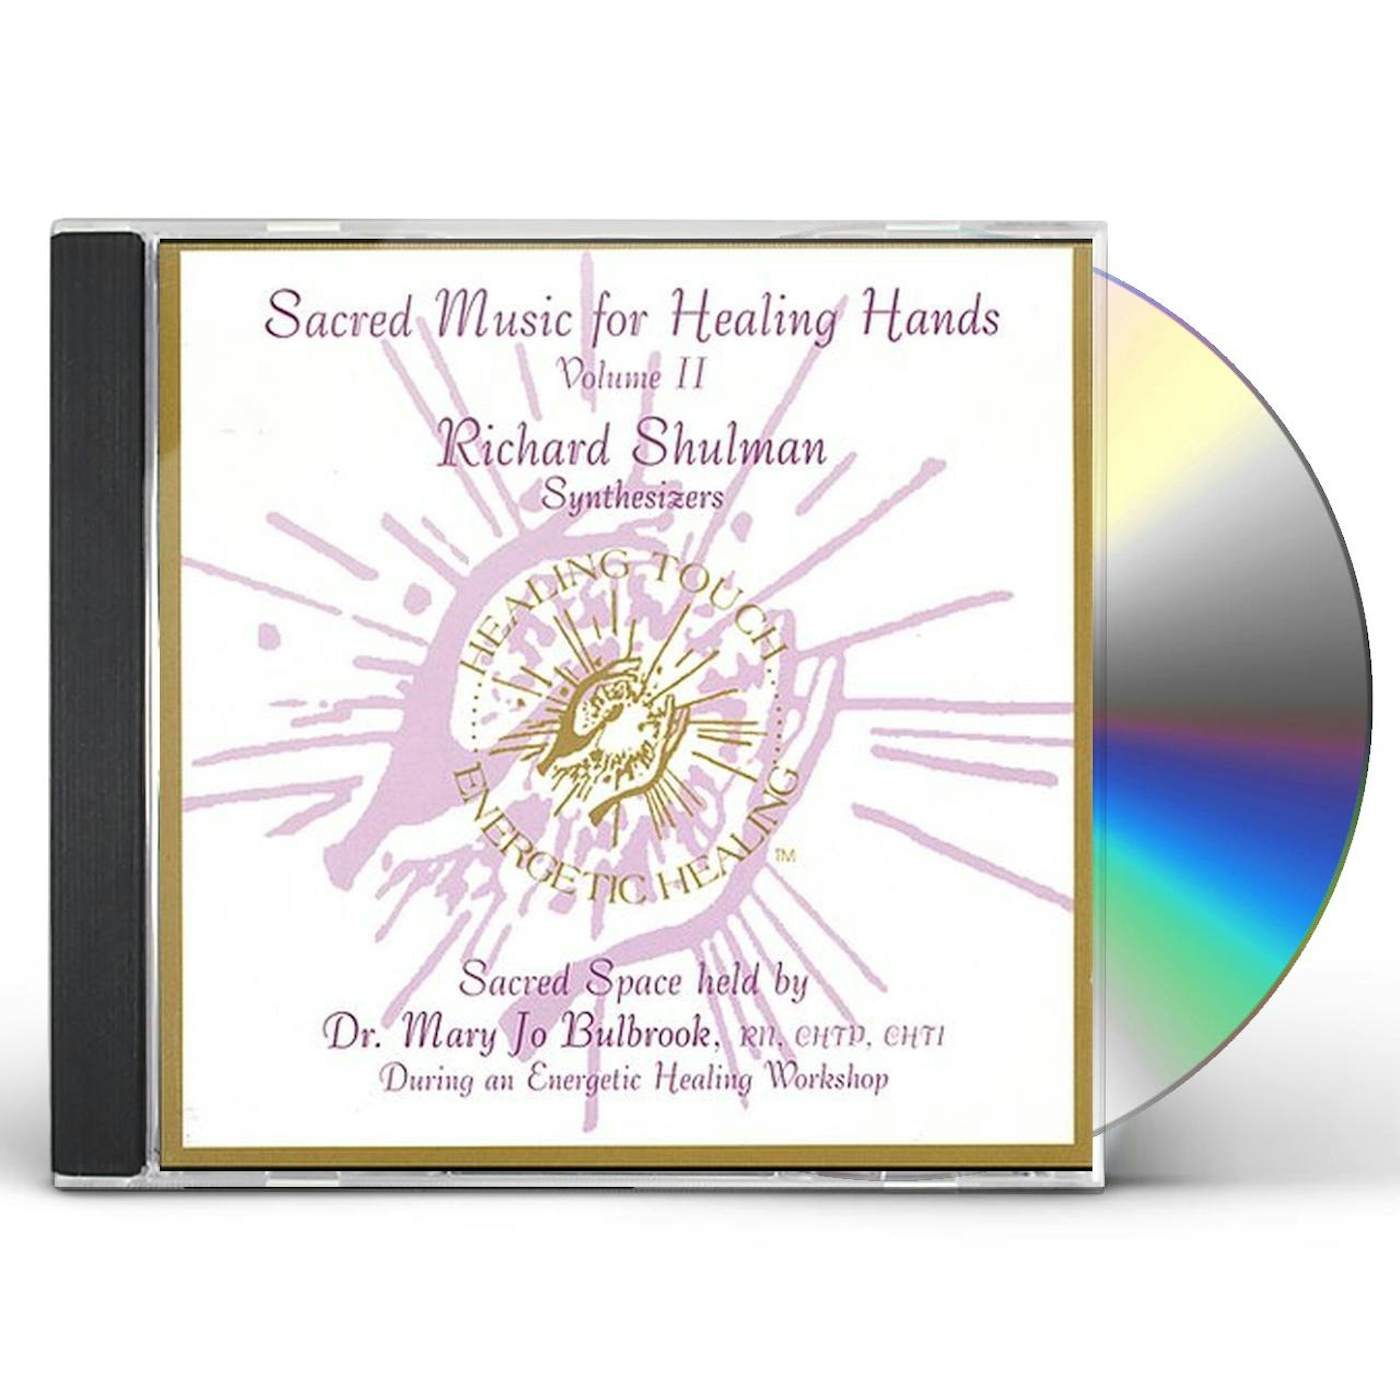 Richard Shulman SACRED MUSIC FOR HEALING HANDS 2 CD